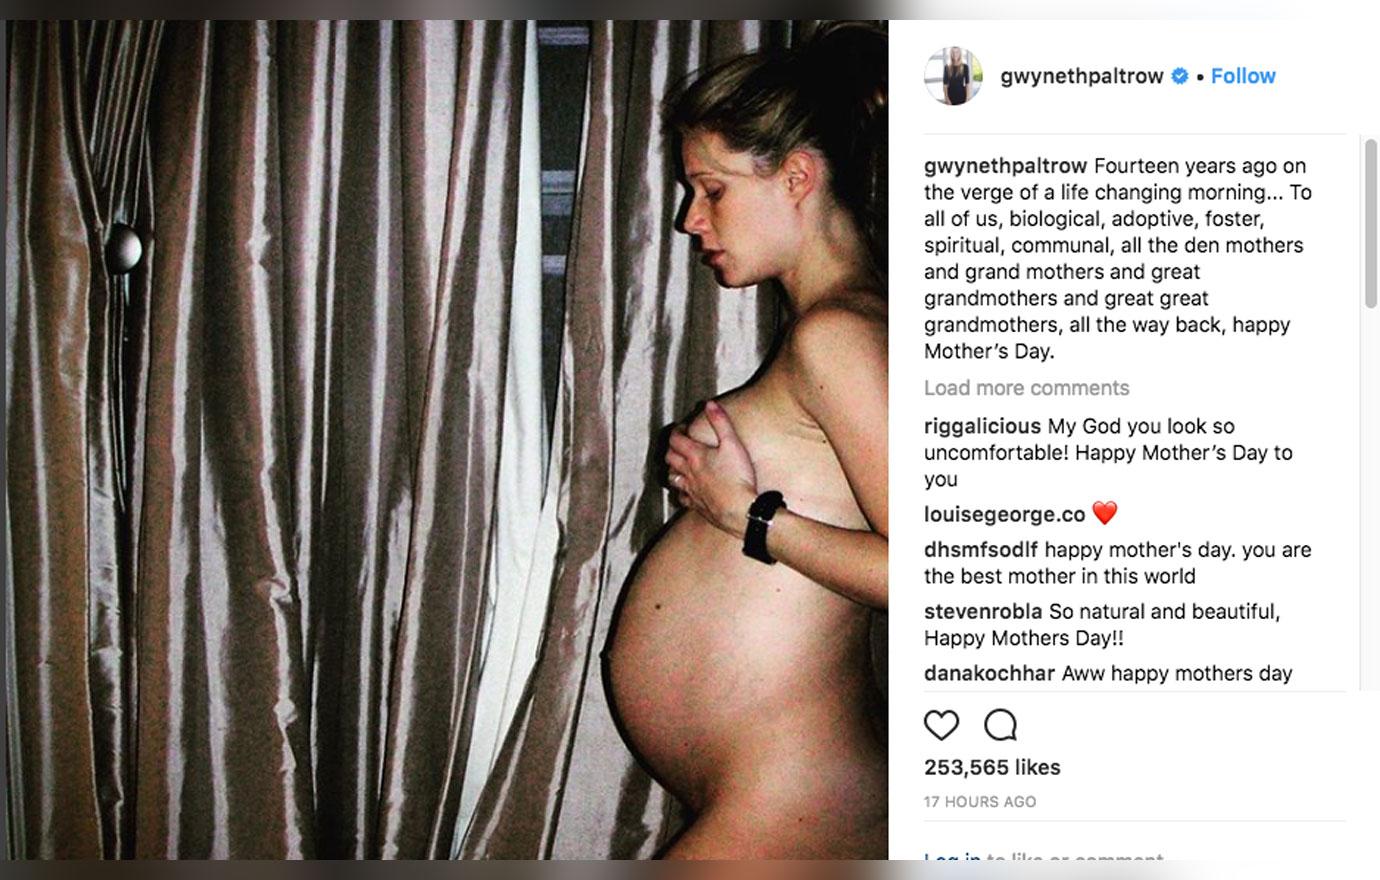 Gwyneth paltrow and brad pitt naked